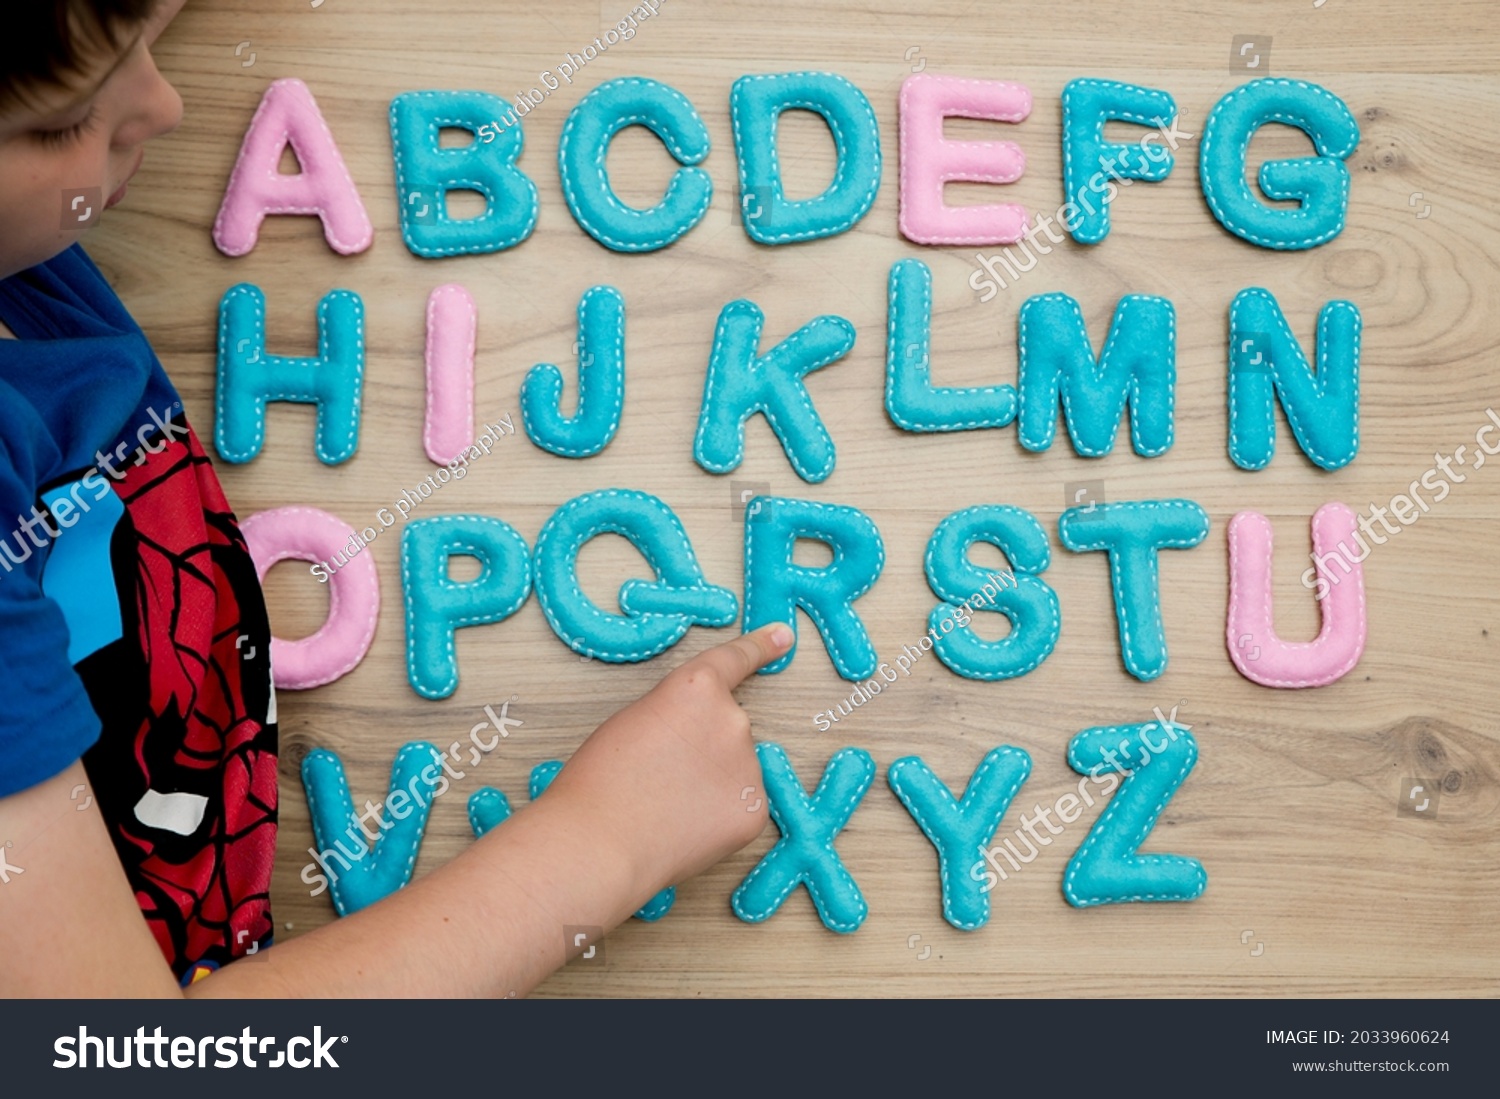 full-alphabet-capital-letters-made-stuffed-stock-photo-2033960624